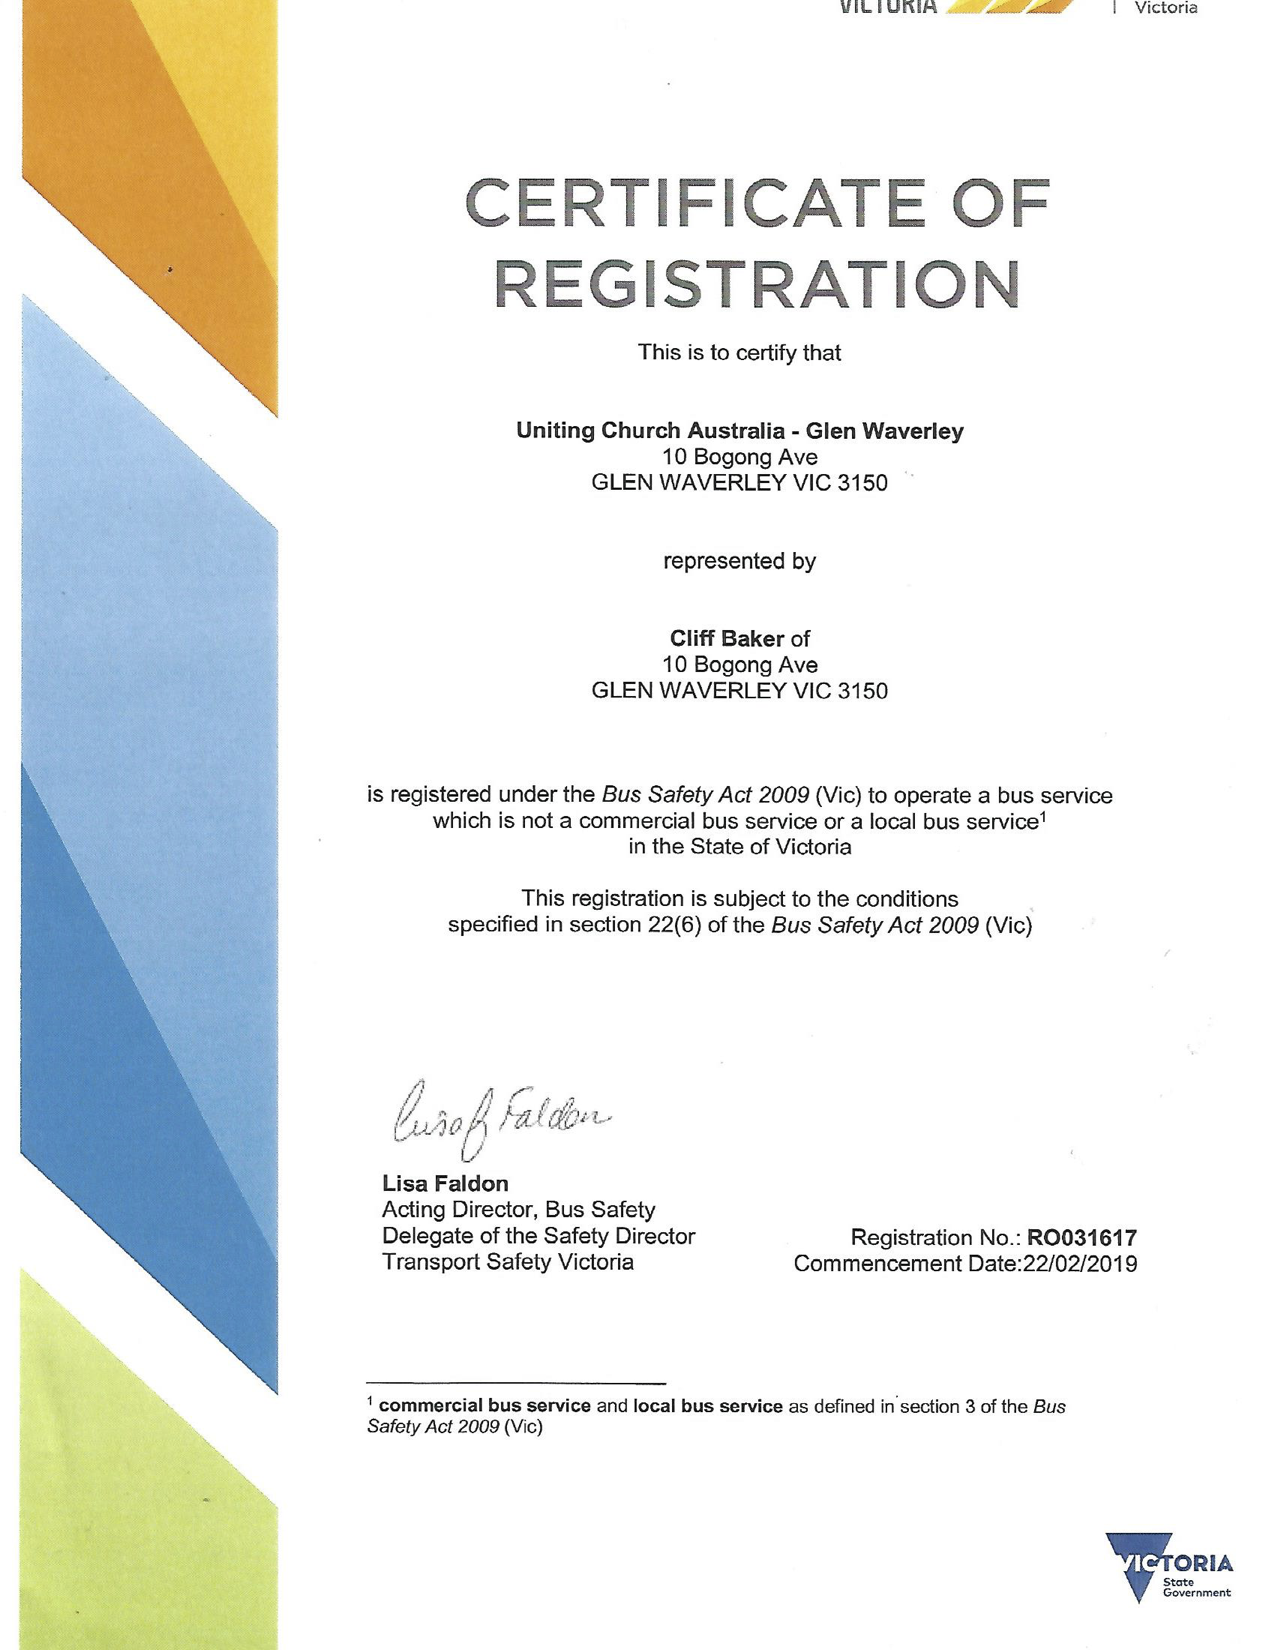 Bus Certificate of Registration Feb 2019.png